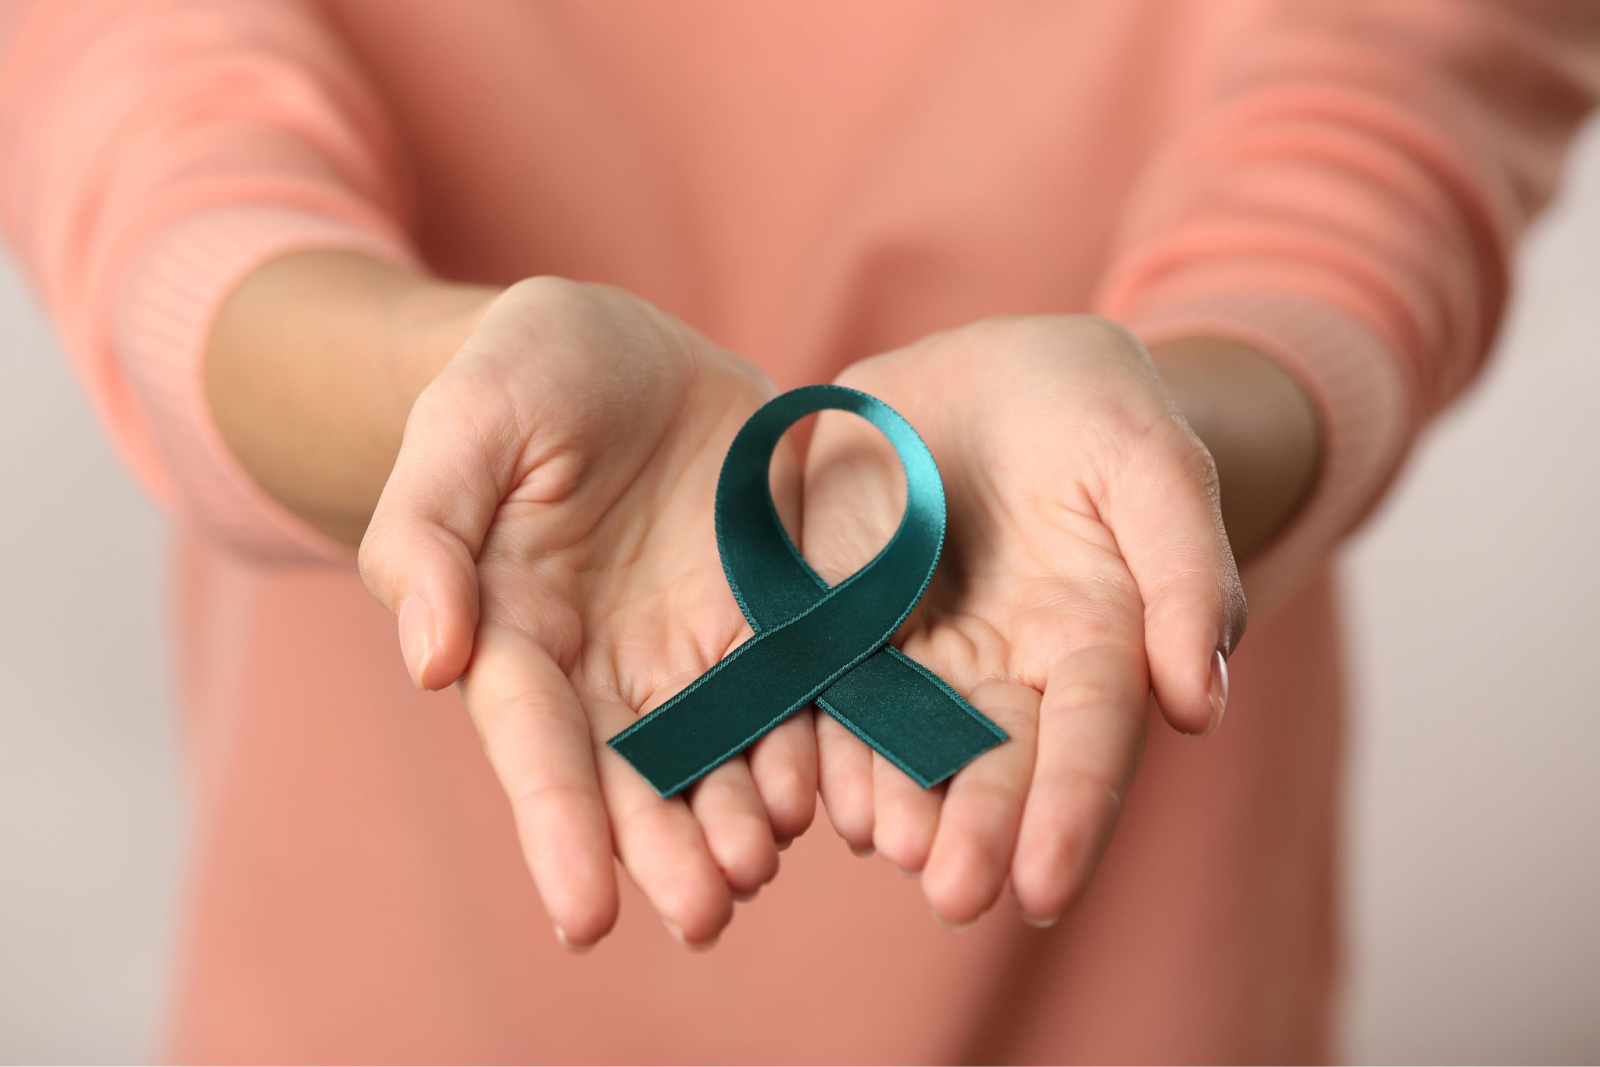 Latest: Novel HPV Test to Eliminate Cervical Cancer - Asiana Times